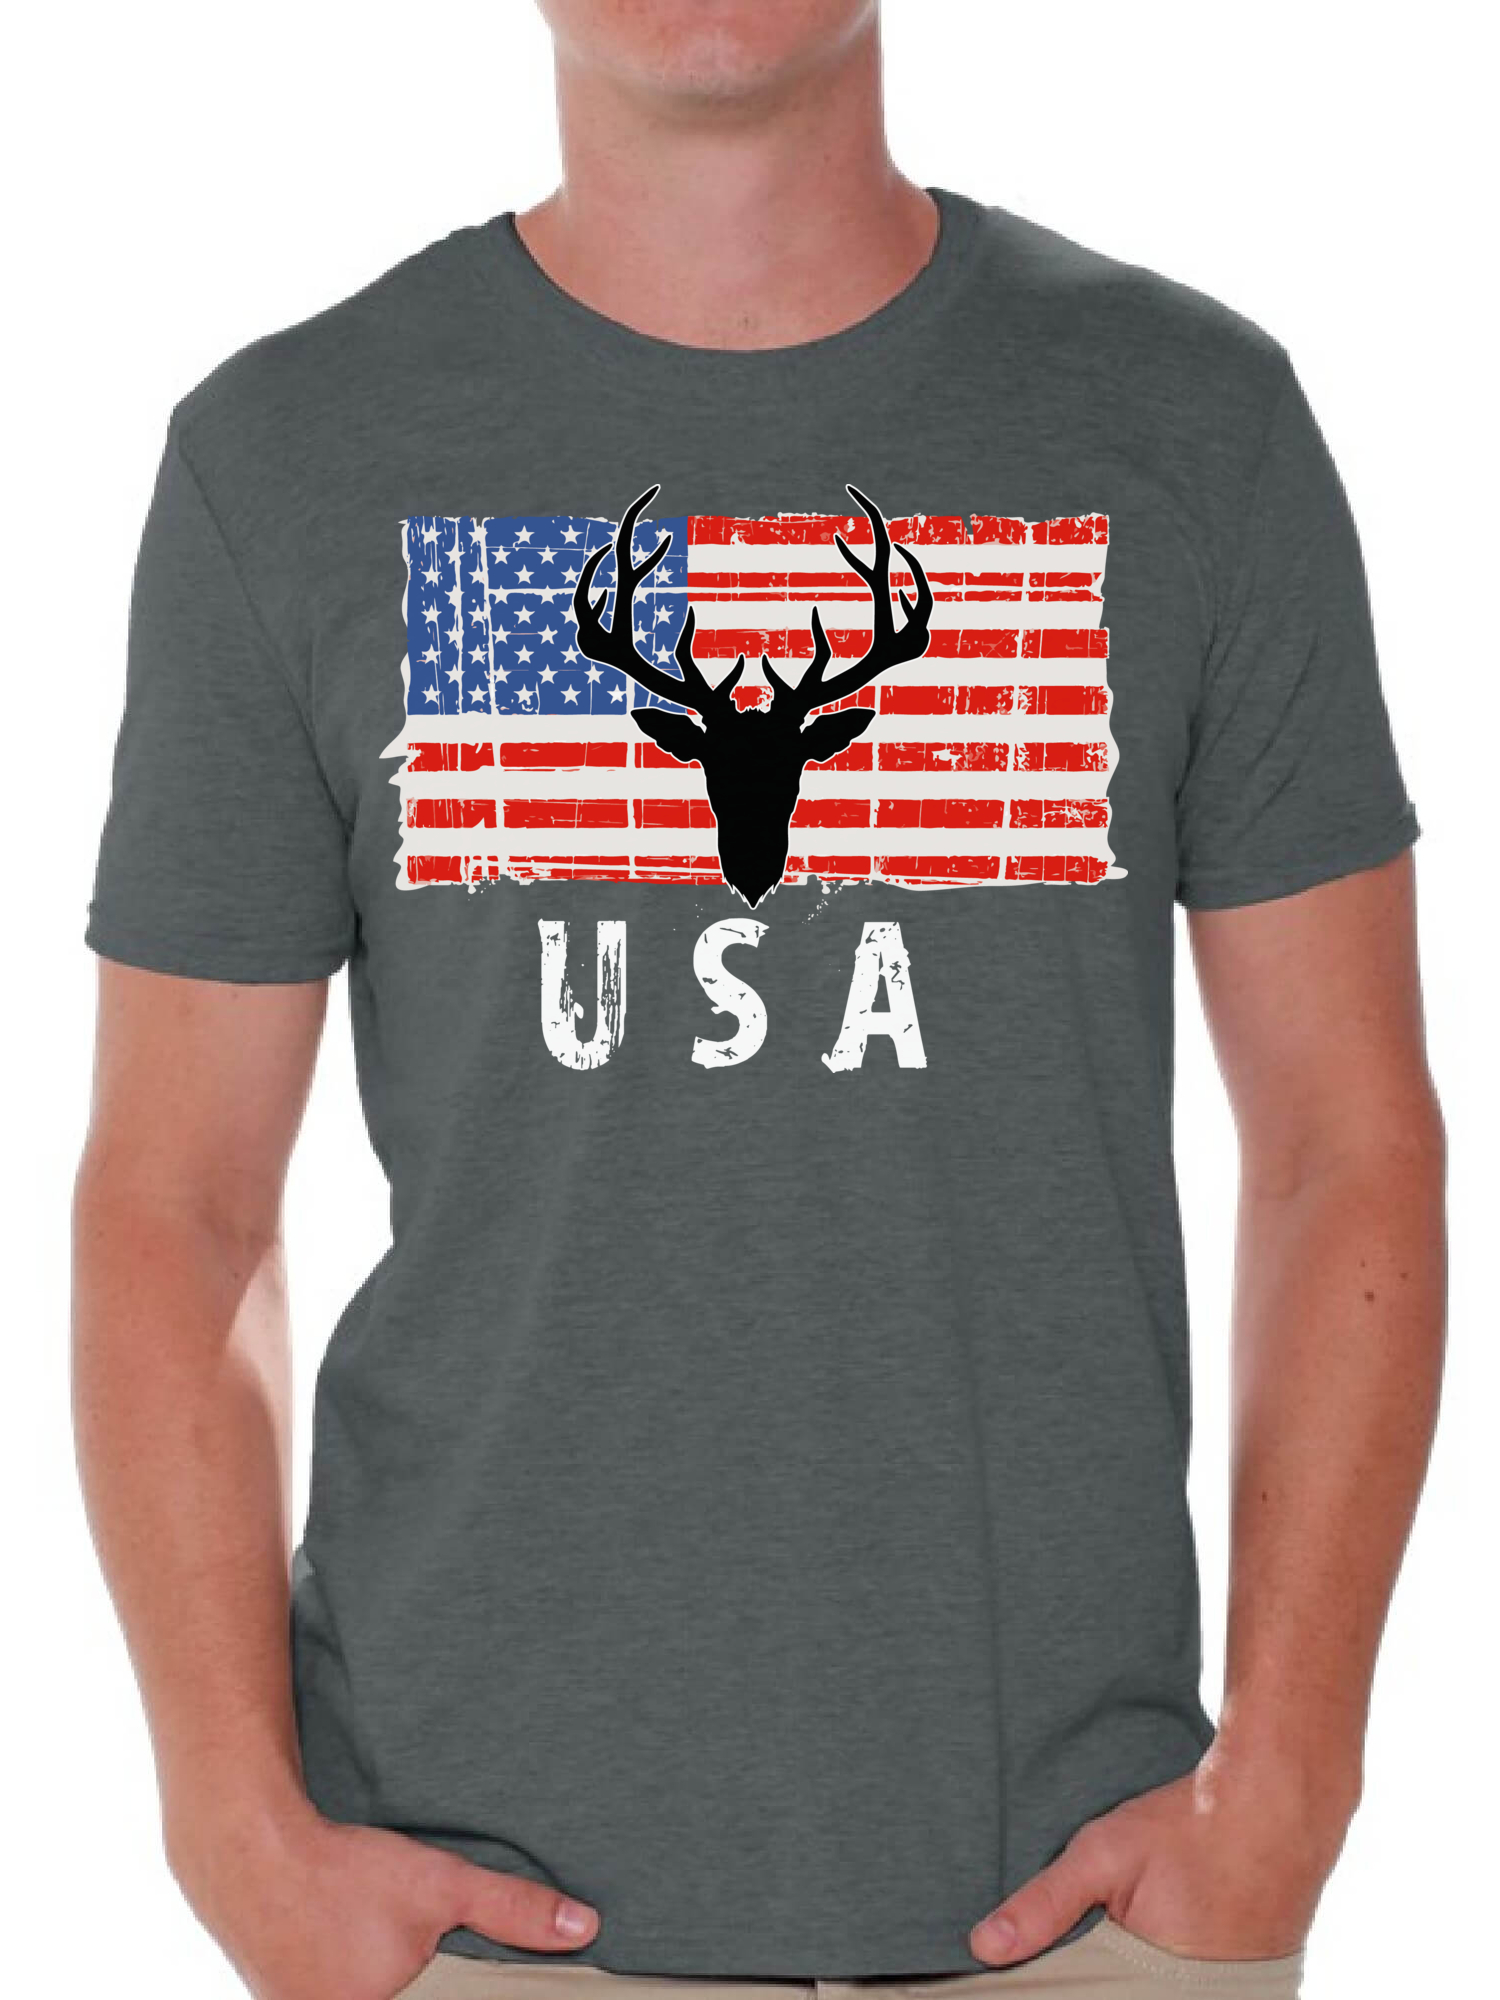 Awkward Styles Hunting Deer USA Men Shirt 51 States American Flag Men T shirt Gifts for Men Pro America Tshirt for Men Hunting Gifts 4th of July Men T-shirt Hunting Lovers Patriotic Shirts for Men - image 1 of 4